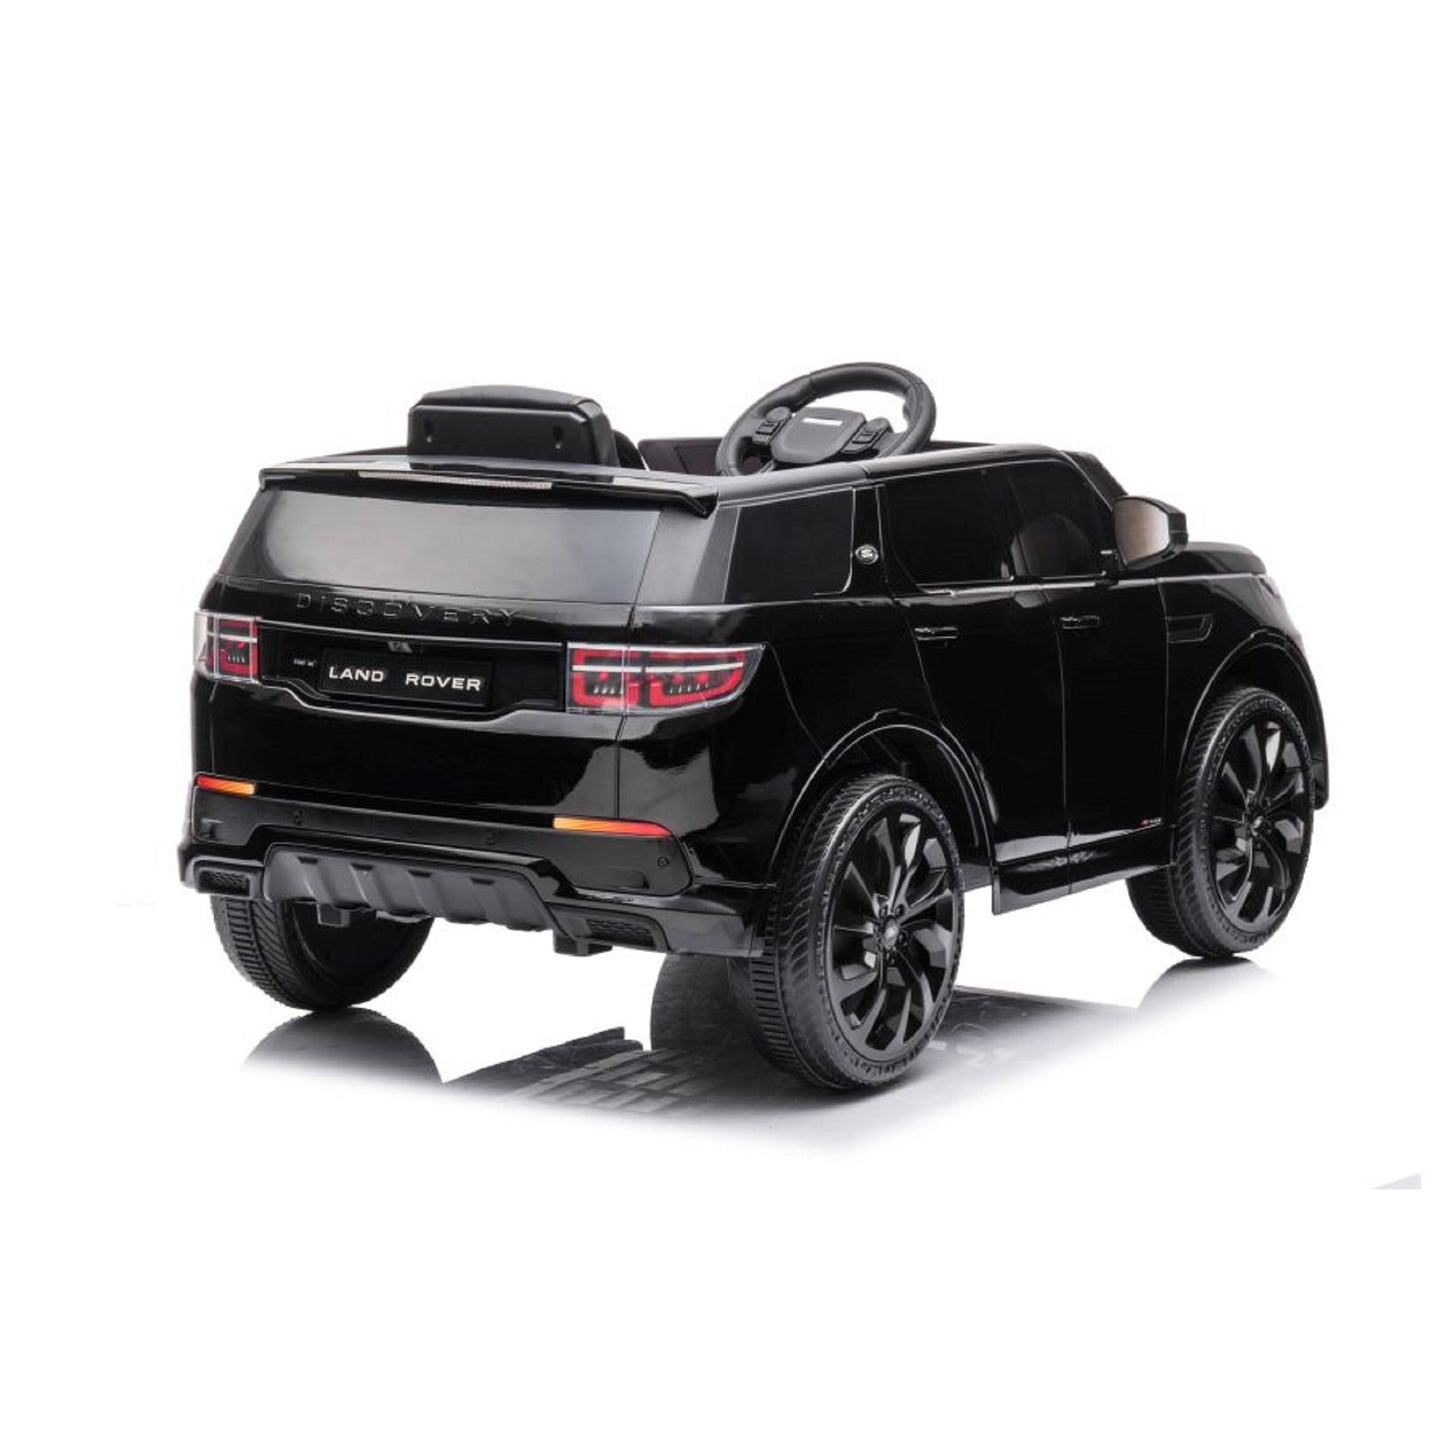 Licensed Range Discovery Sport 12v Kids Ride on Car with Remote - Metallic Black